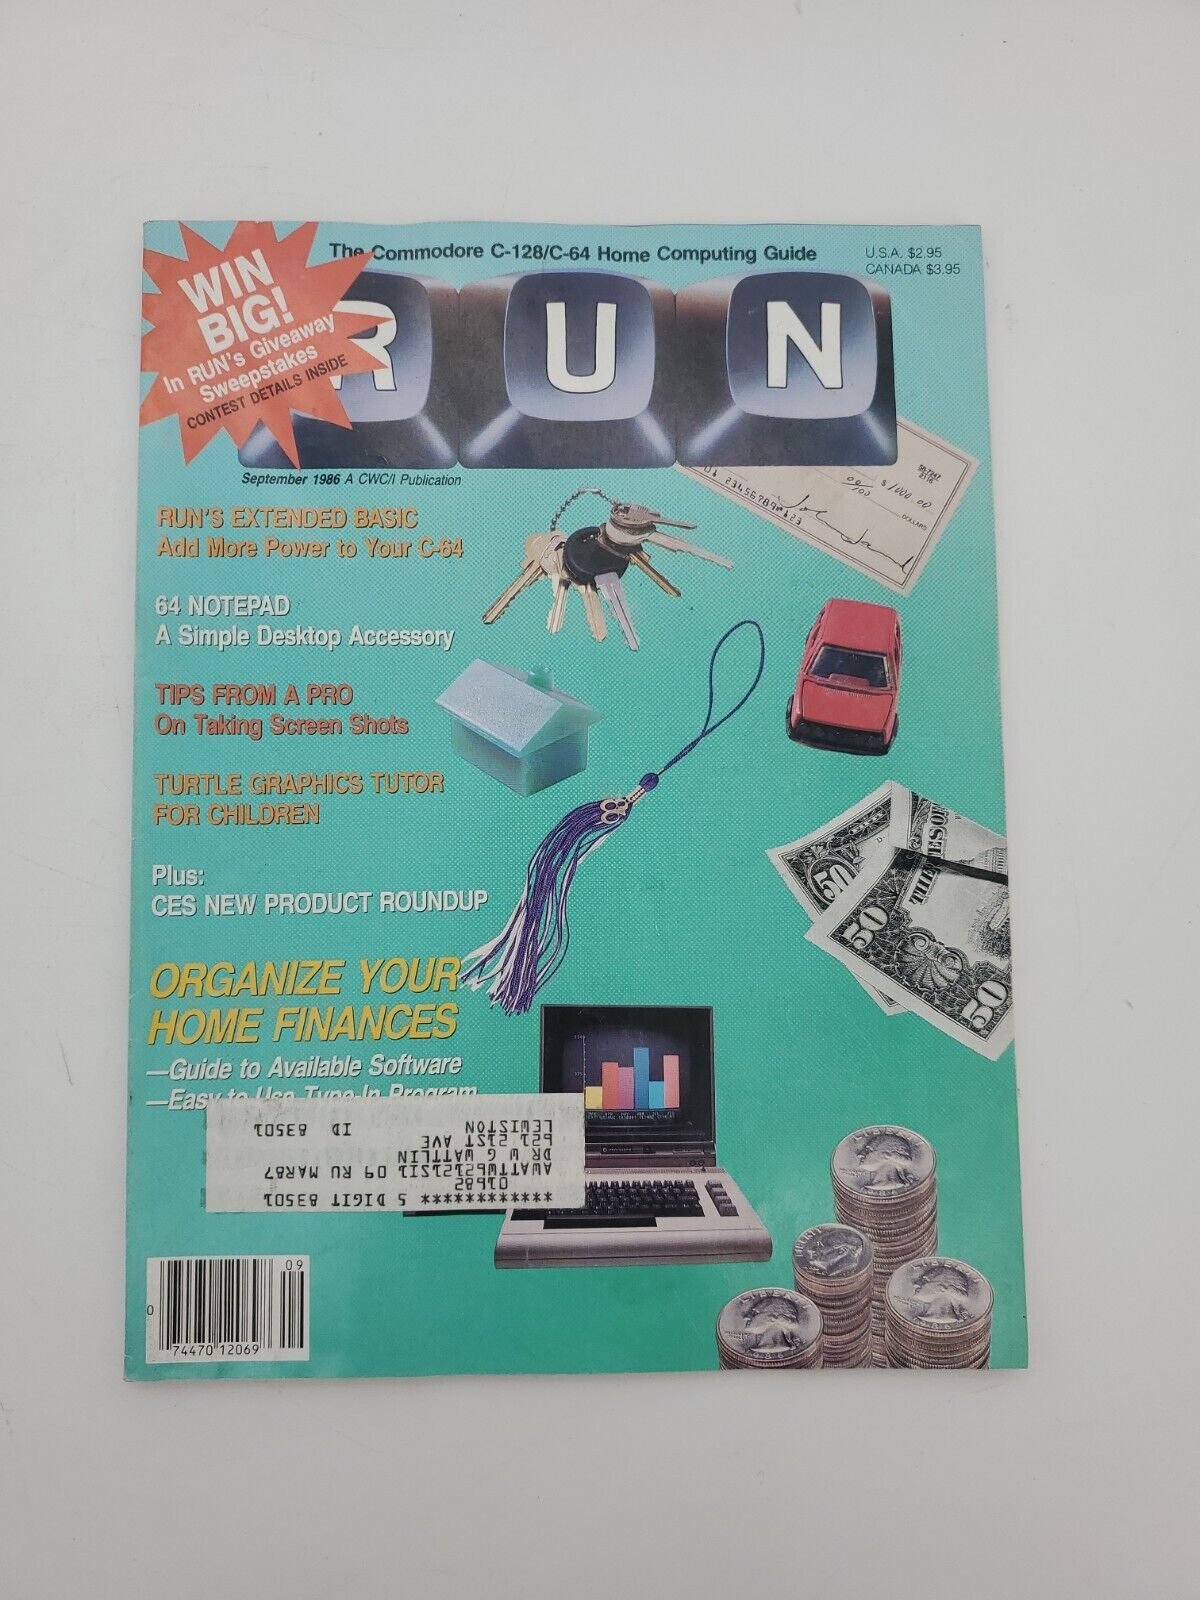 Commodore Magazine RUN Computer Sept 1986 vintage computing IT Technology